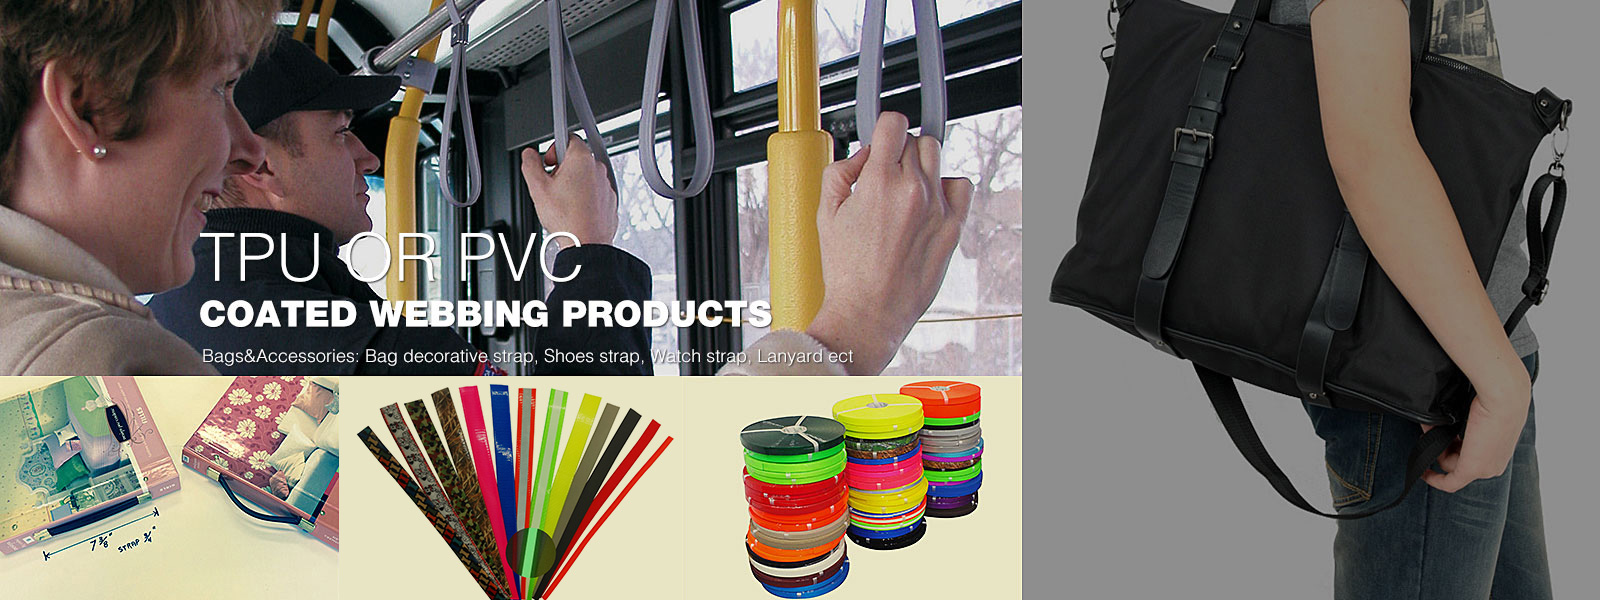 PVC coated webbings